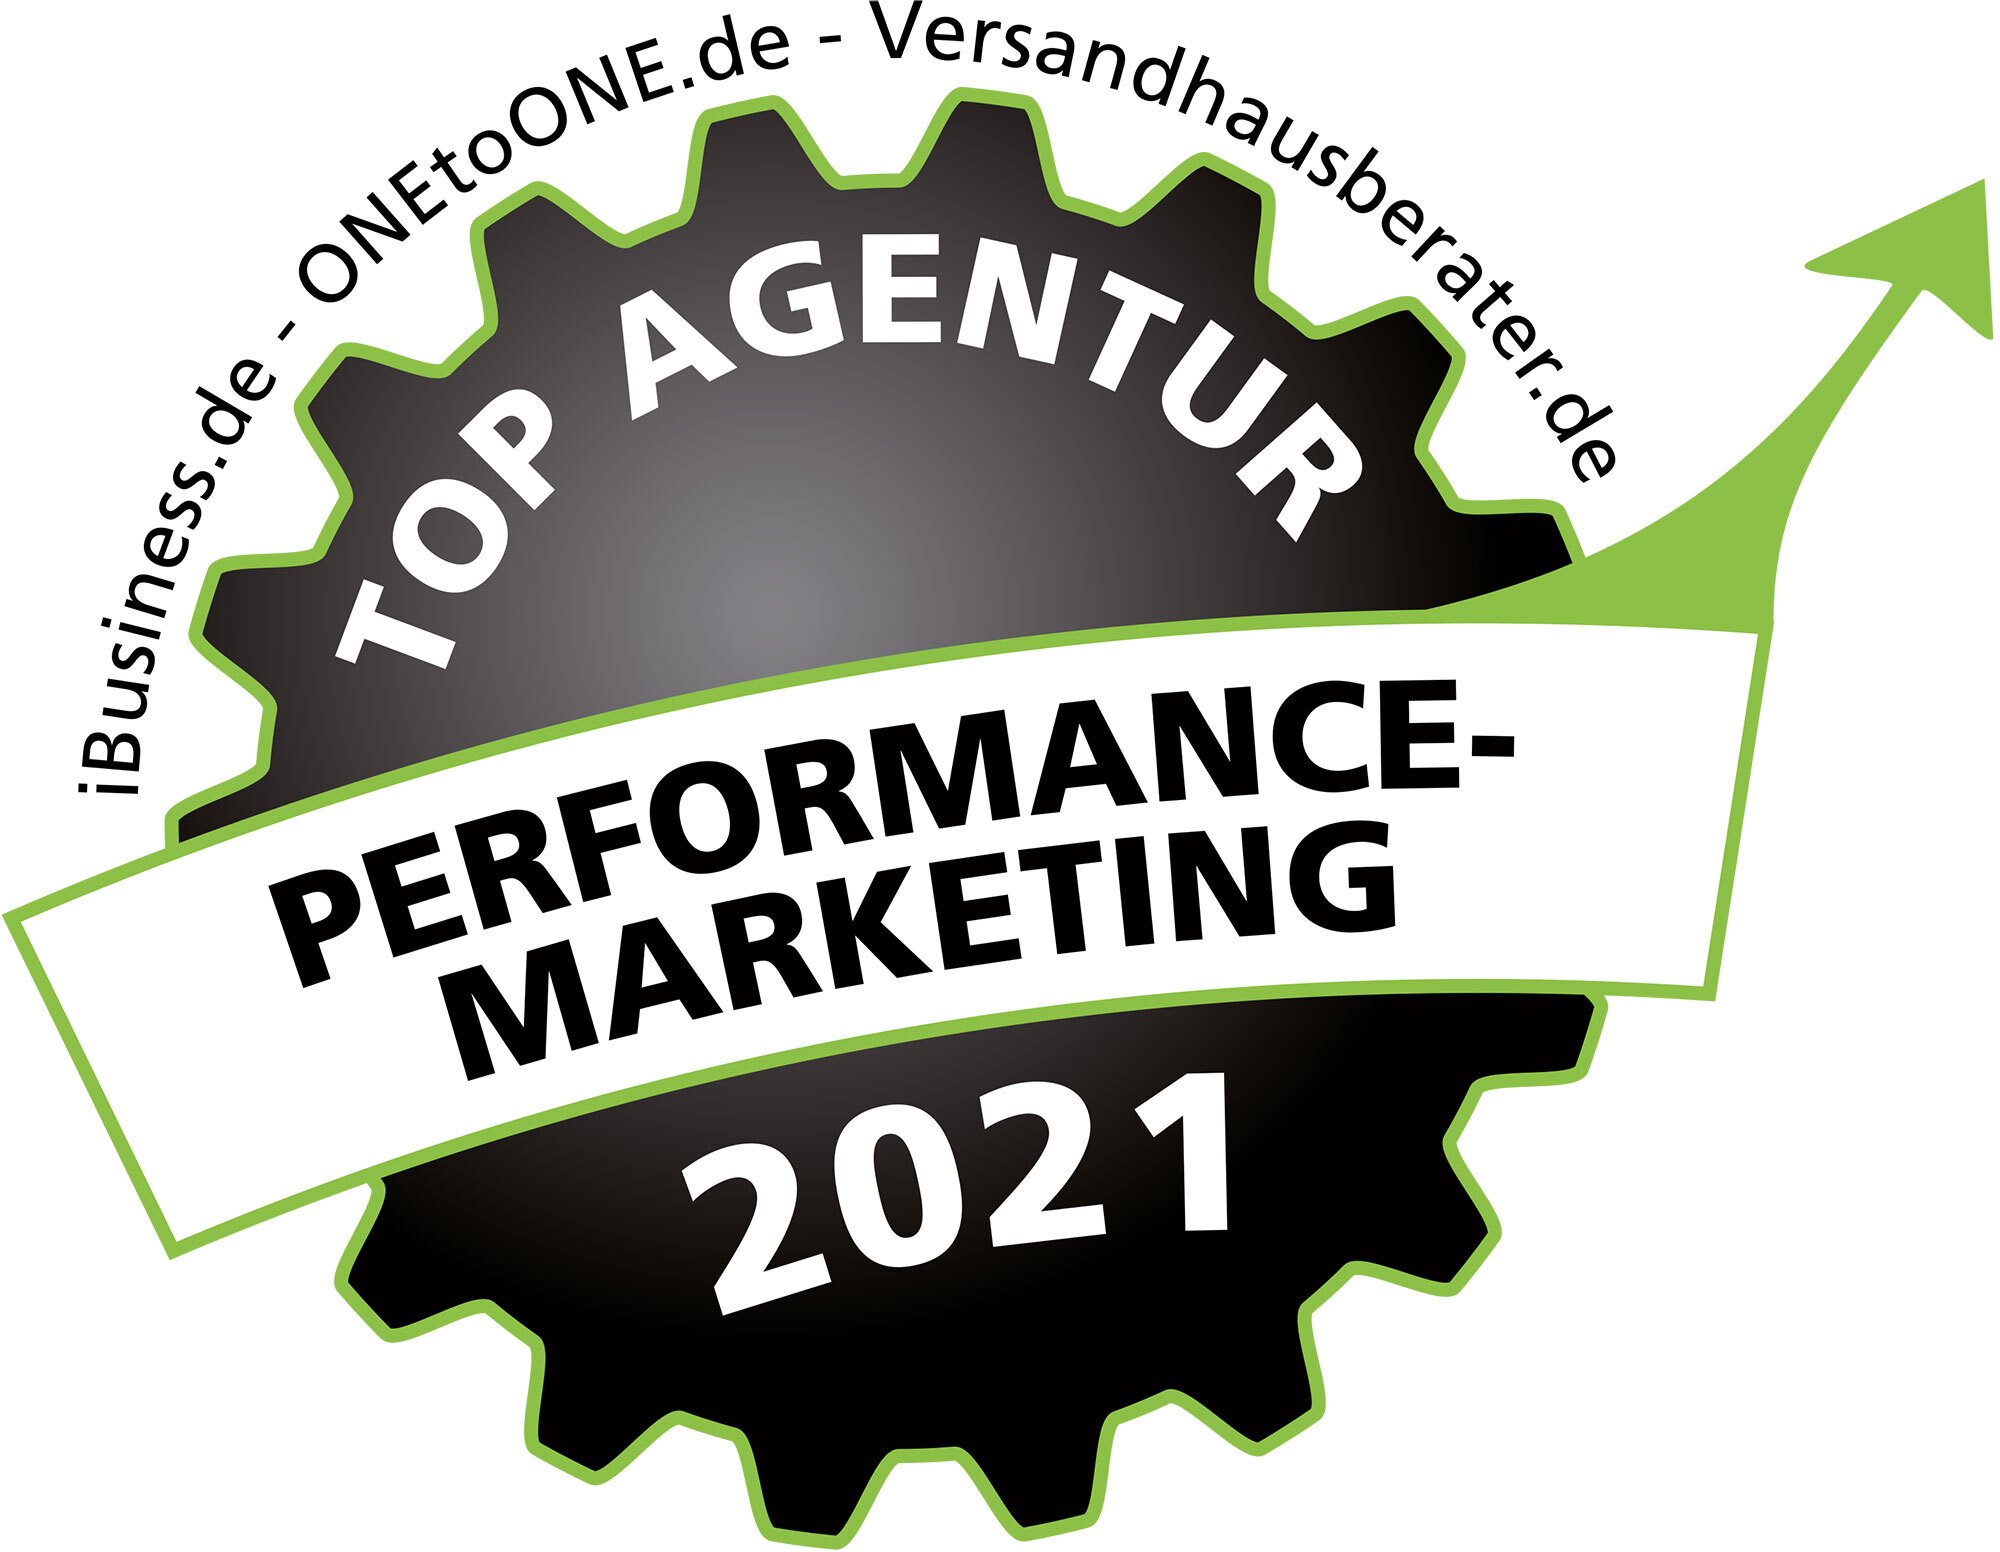 Performance-Marketing-Siegel-2021 (1)